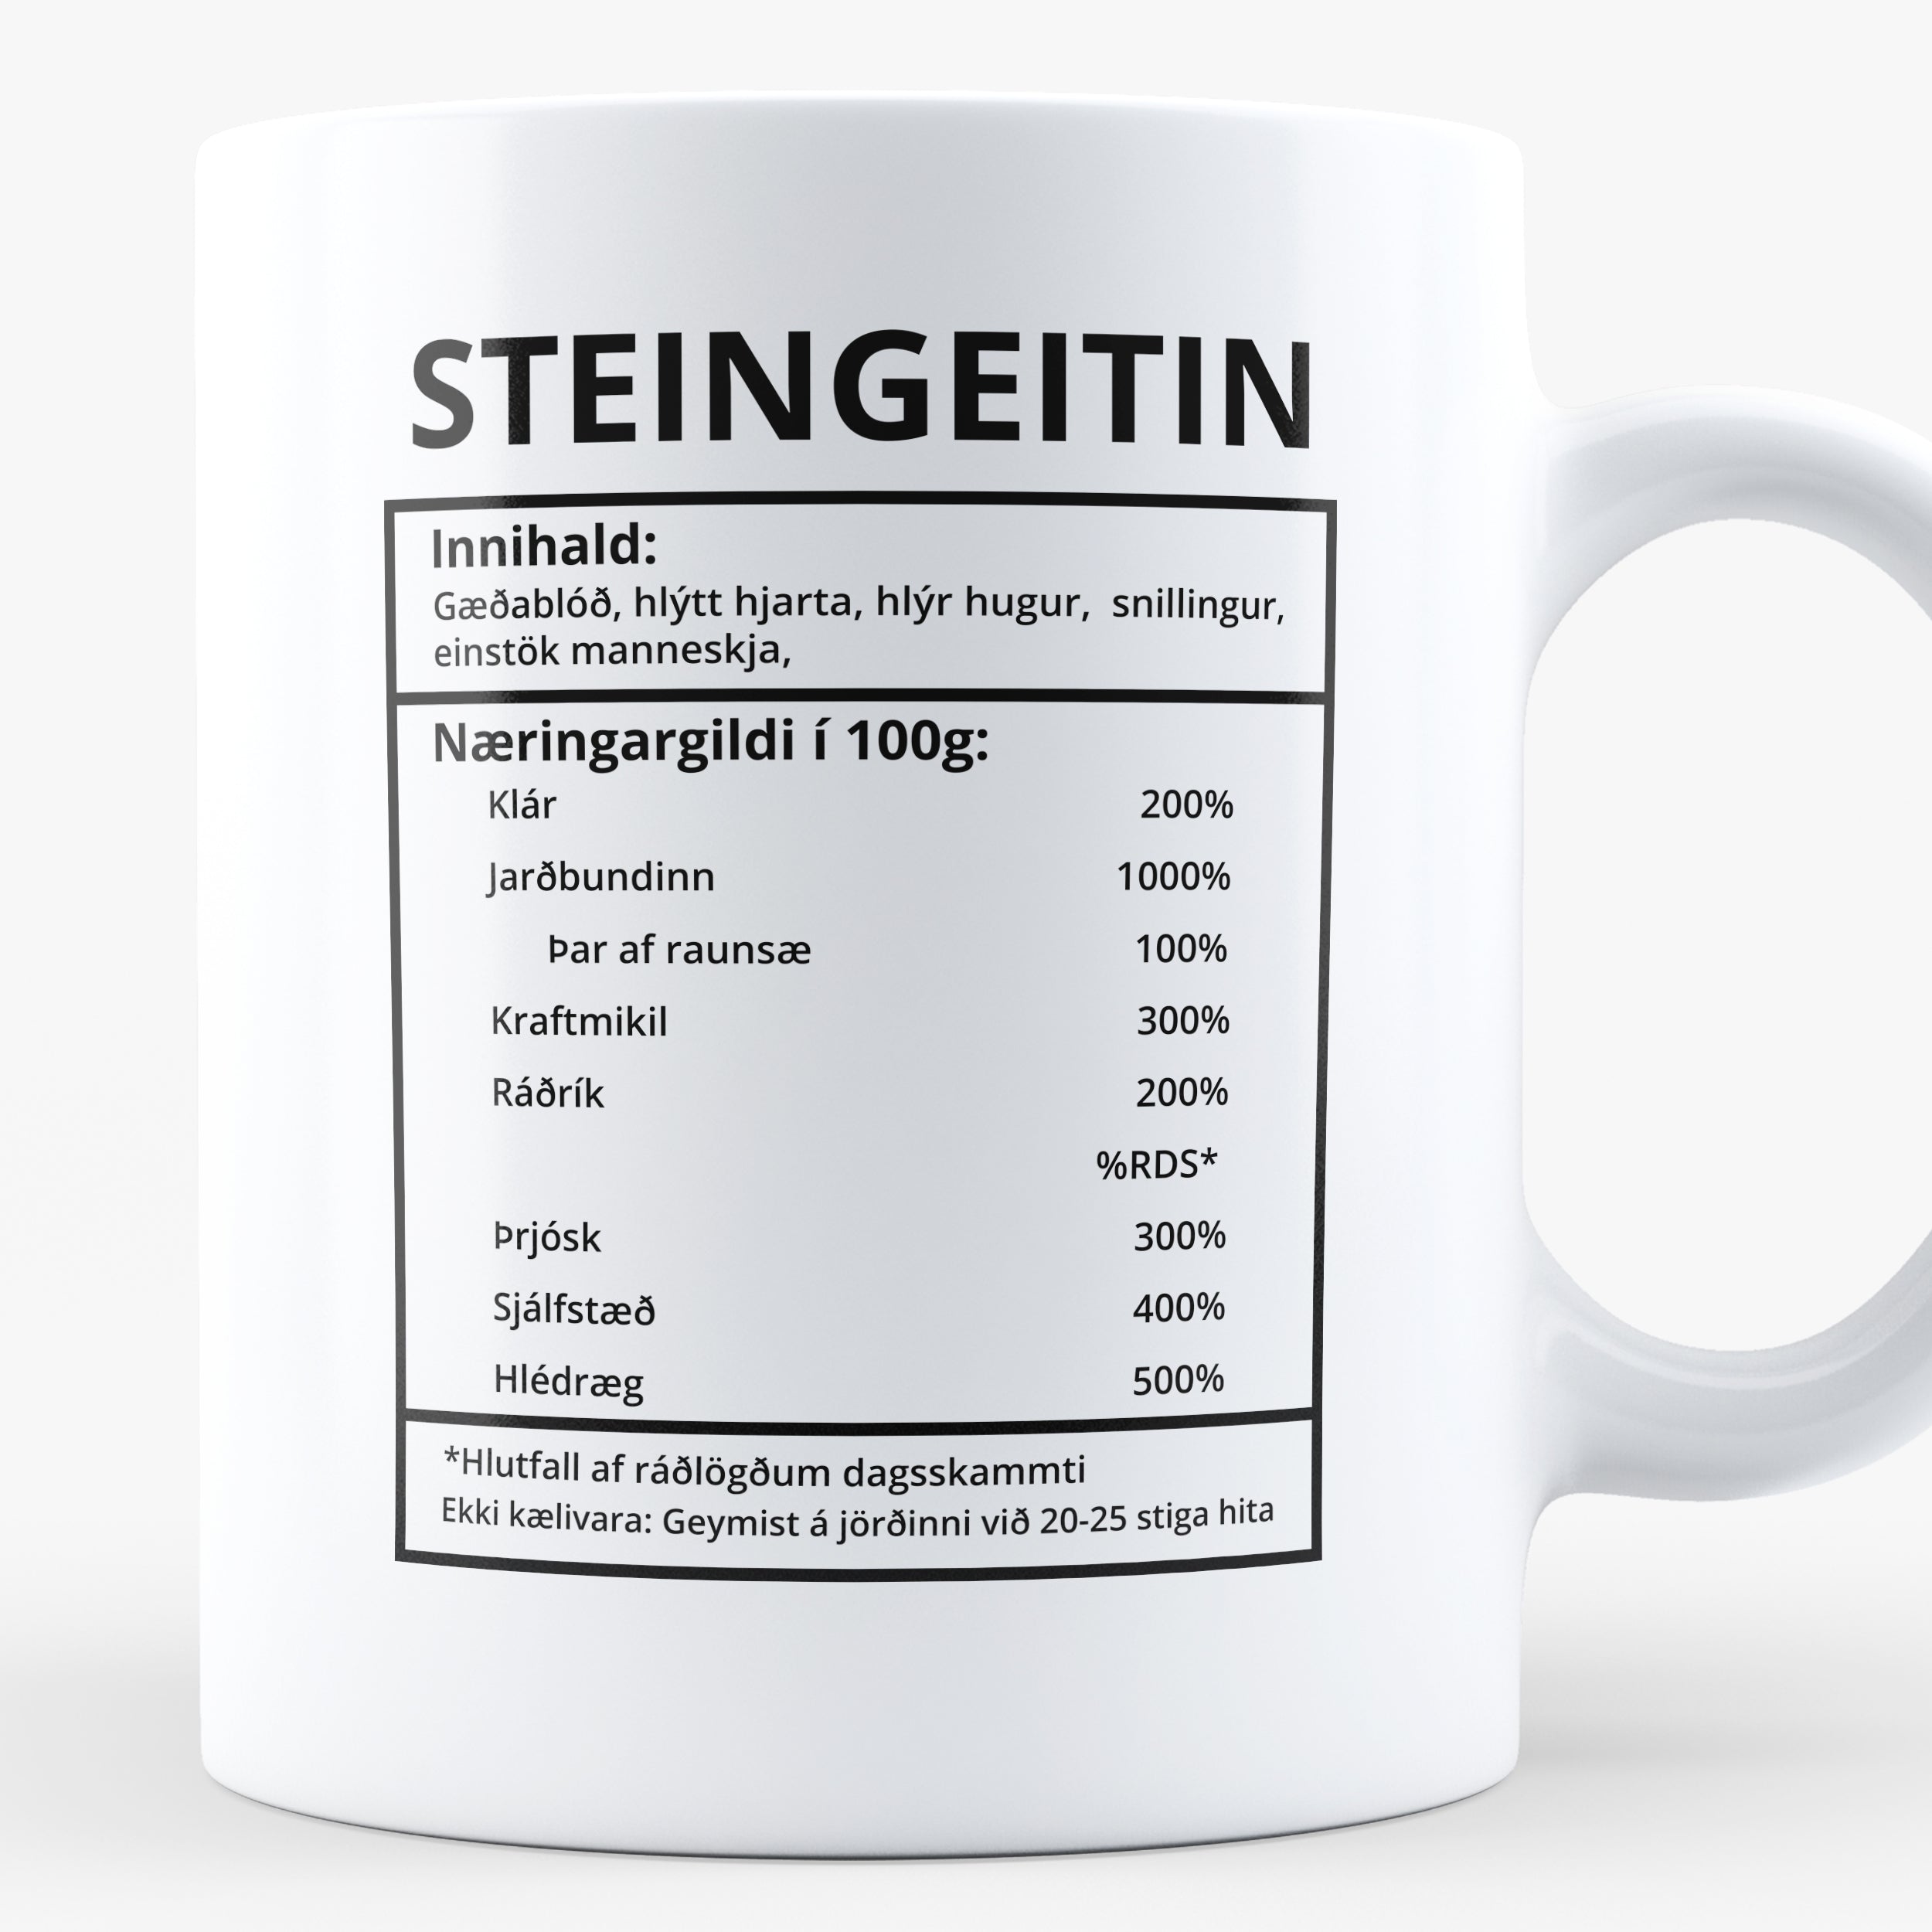 Steingeitin innihaldslýsing - Bolli